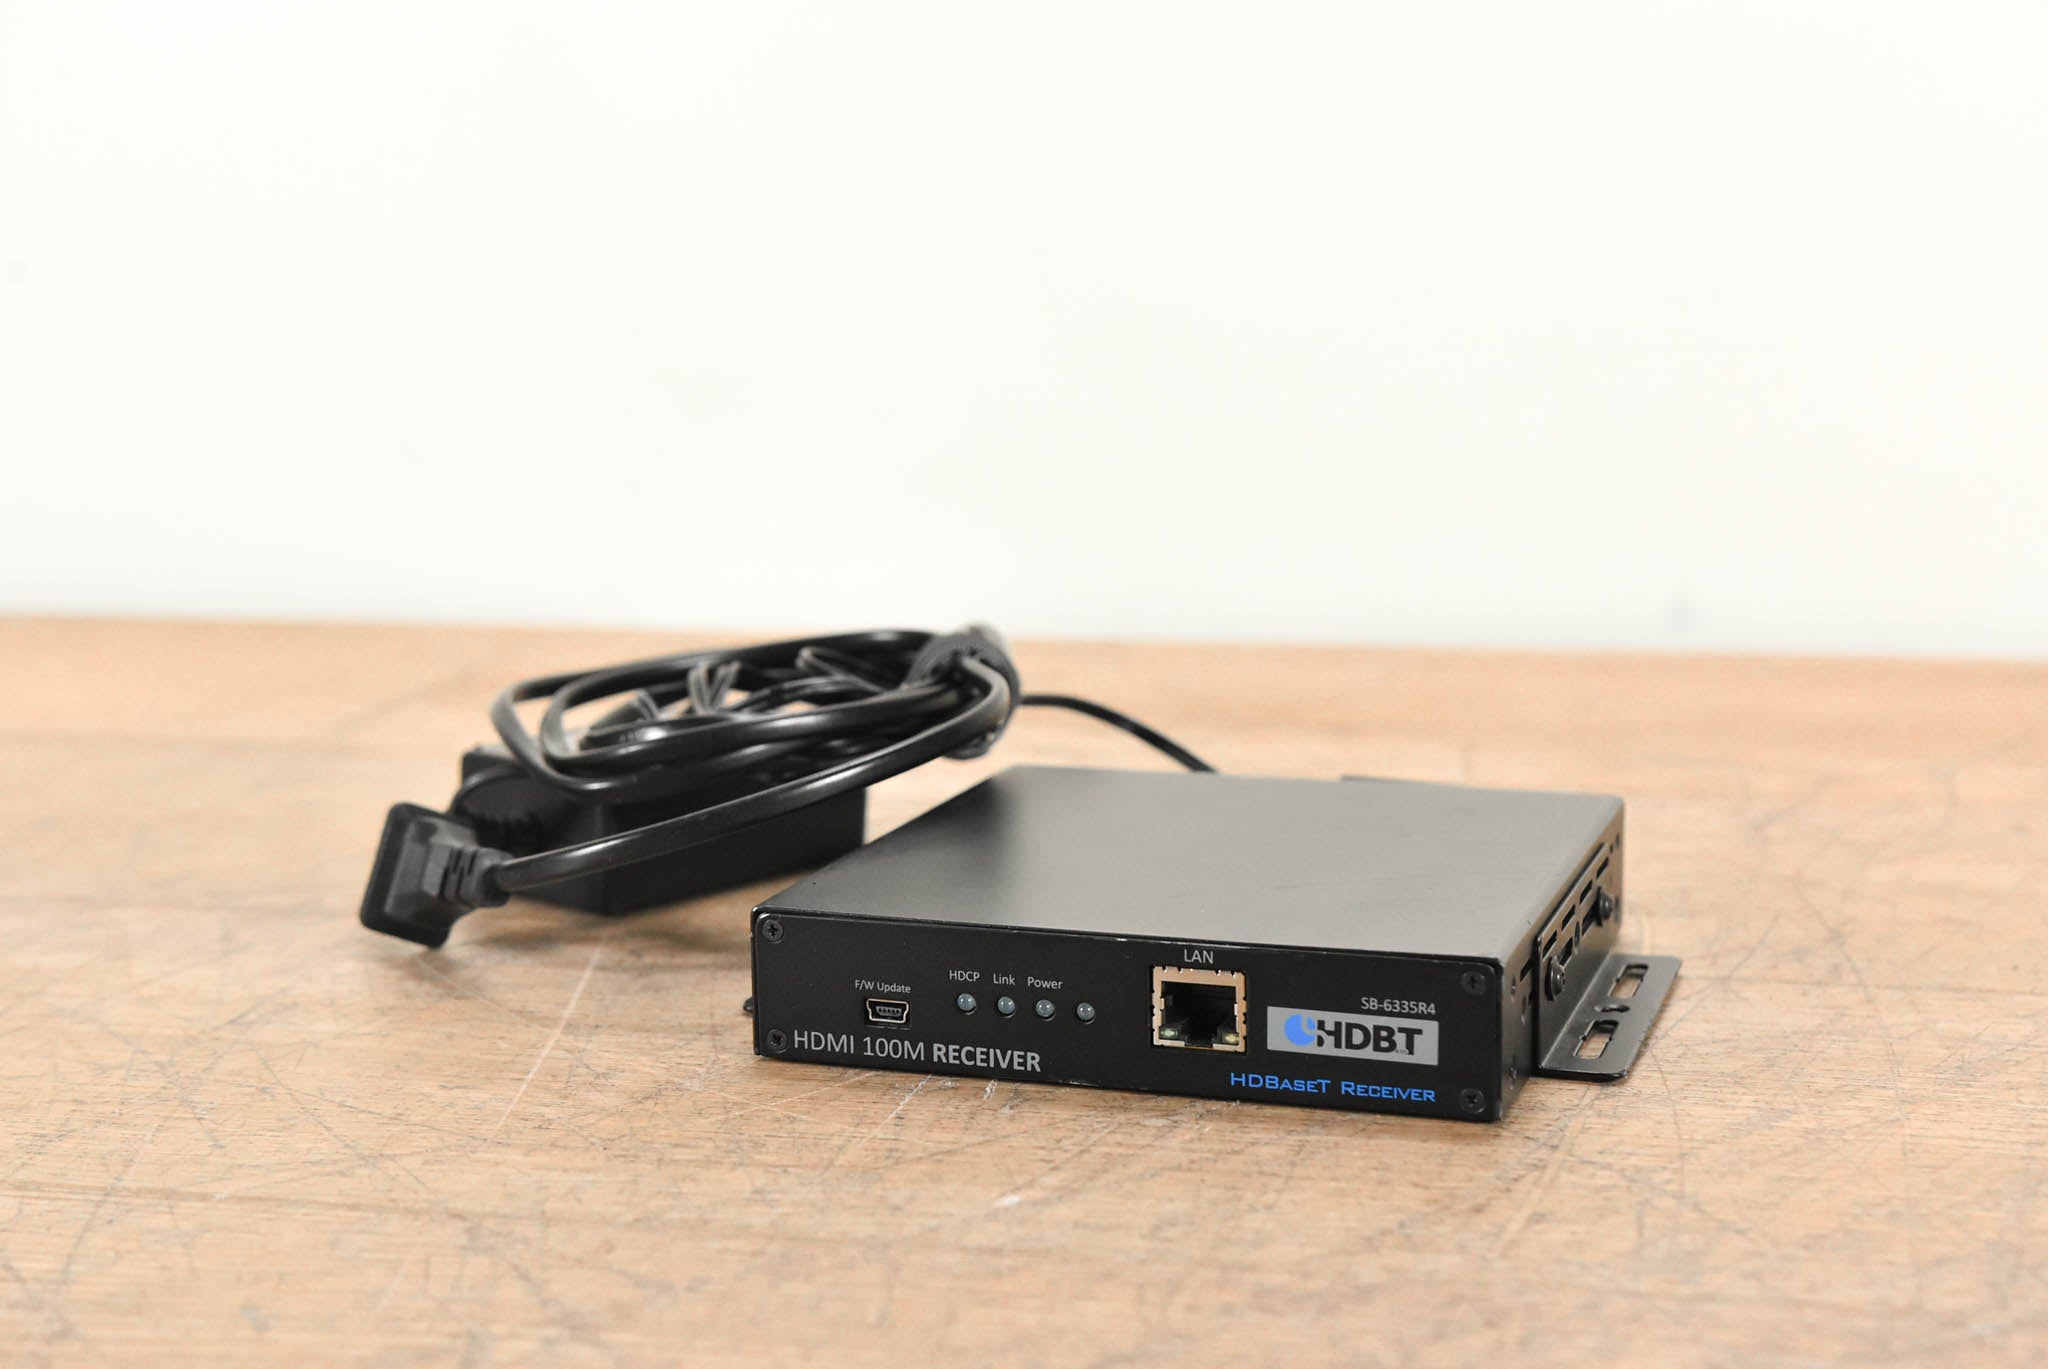 Shinybow SB-6335R4 HDMI HDBaseT Receiver with Ethernet